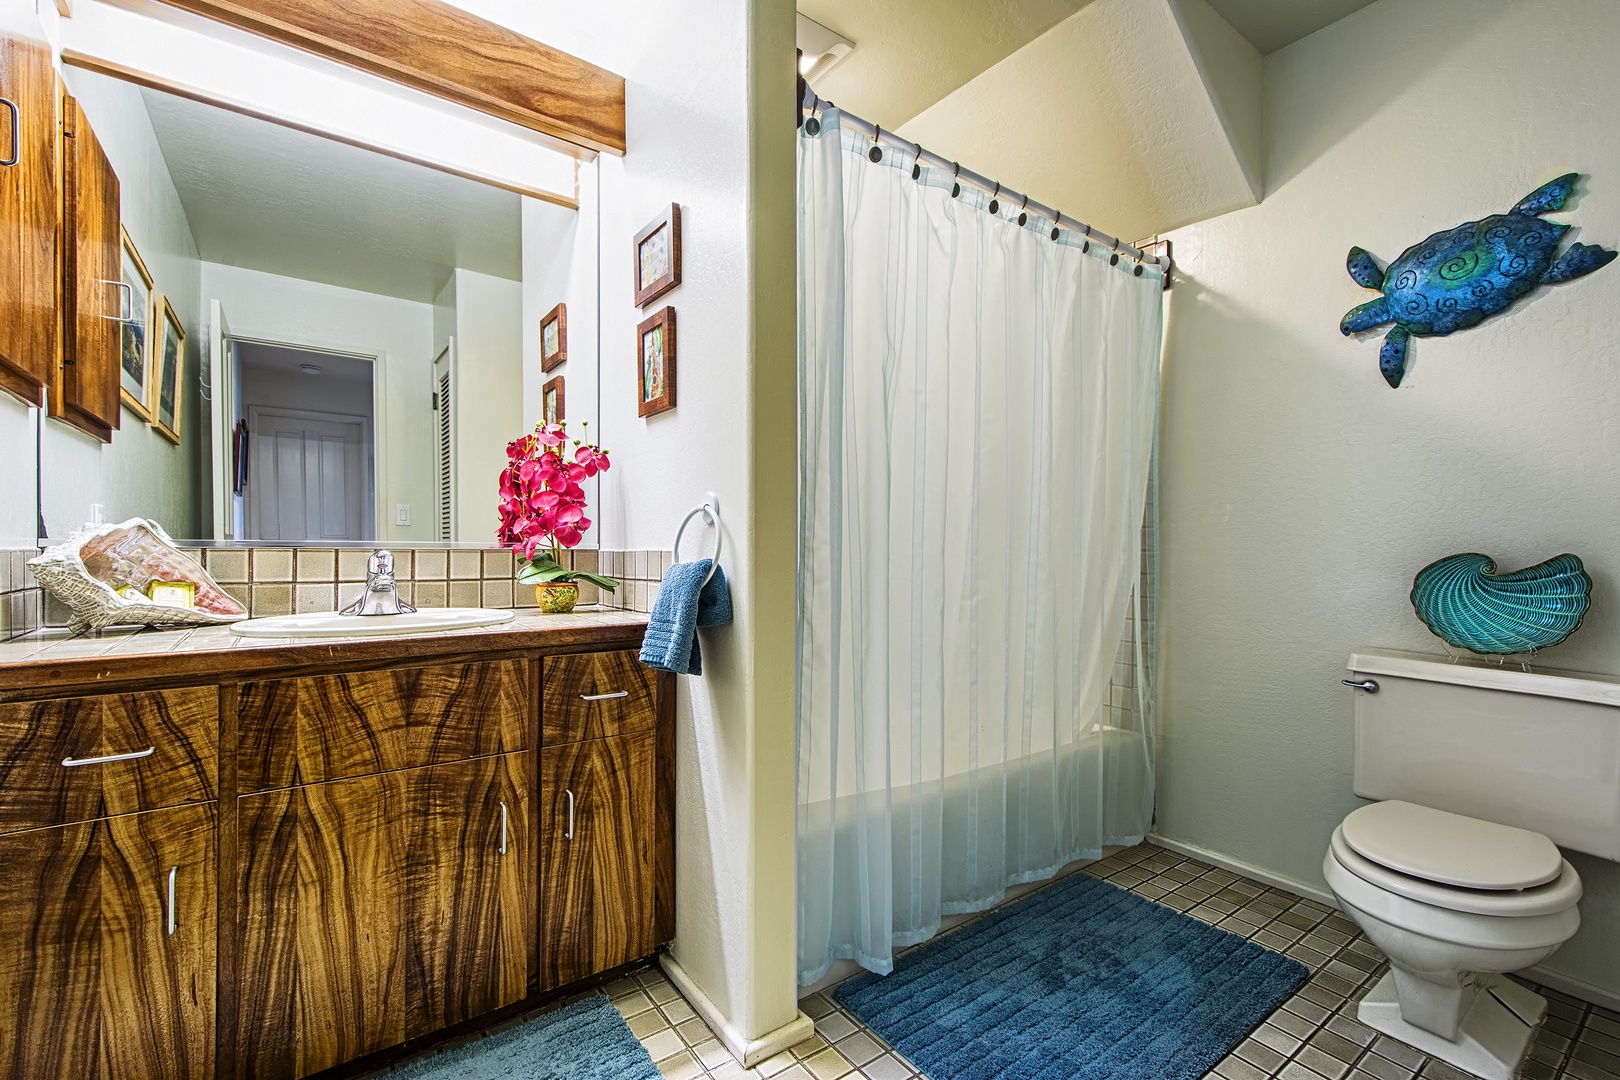 Kailua Kona Vacation Rentals, Kanaloa at Kona 701 - Guest bathroom across the hall from the guest bedroom